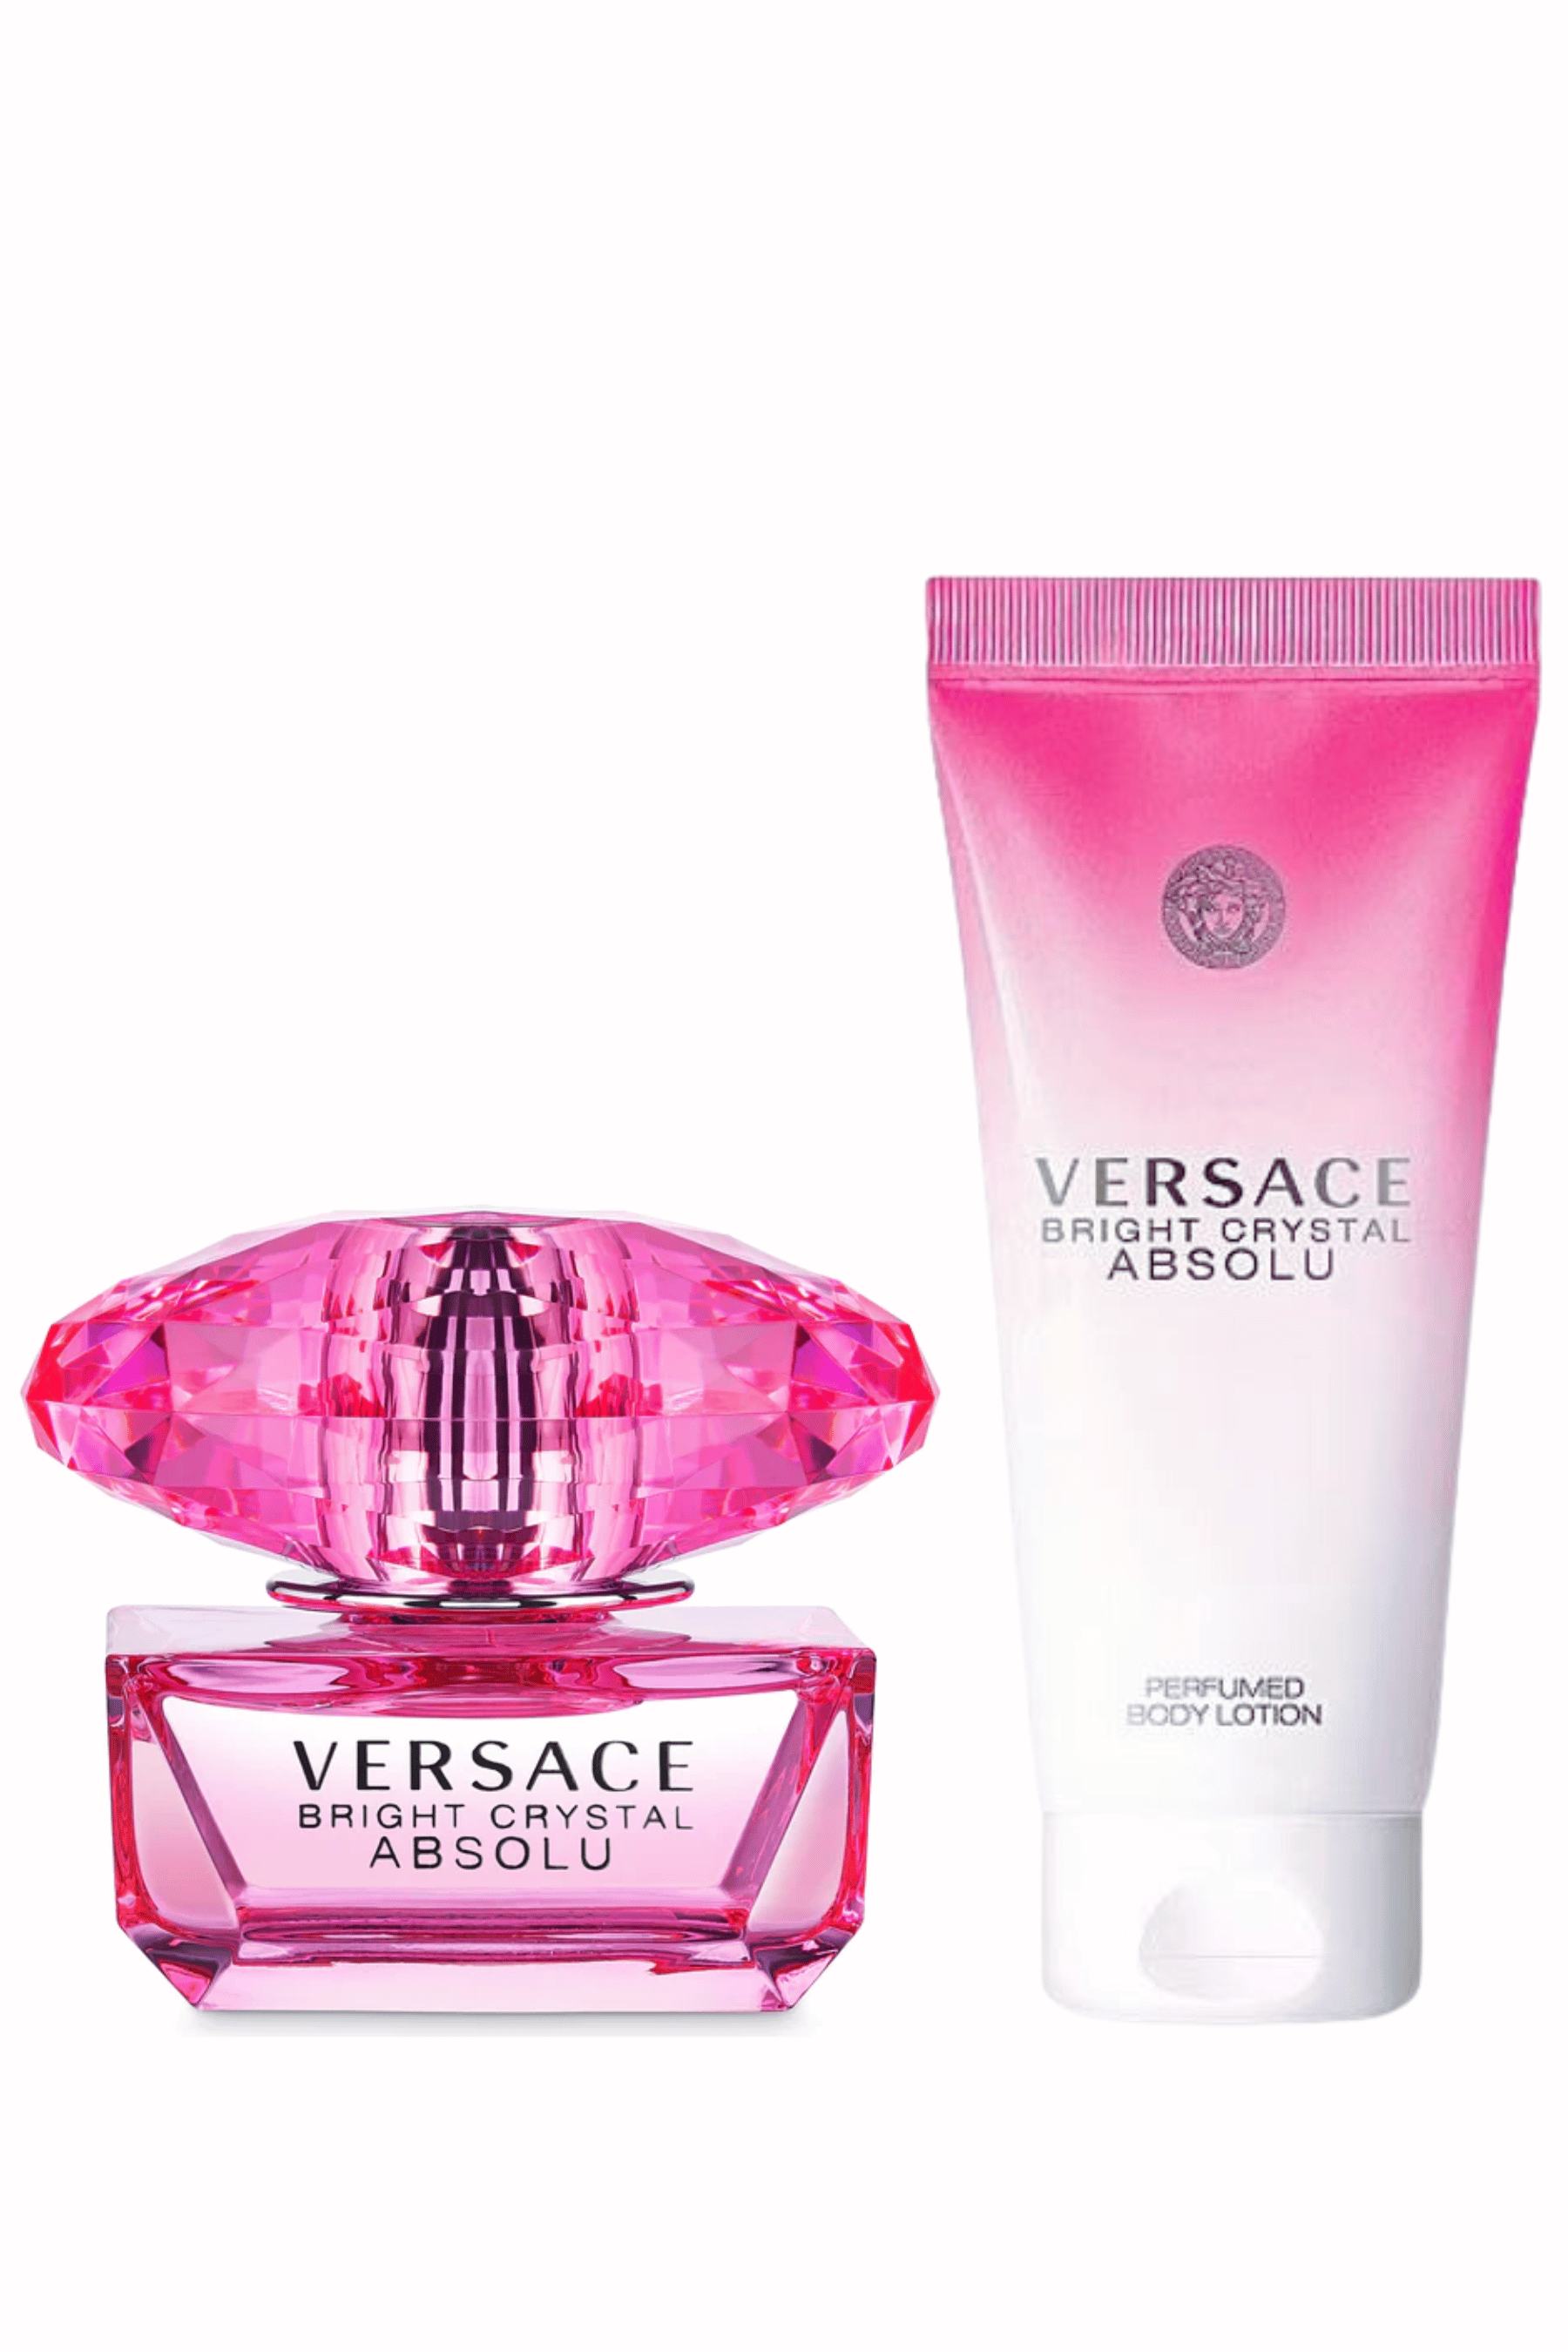 Versace  Bright Crystal Absolu Eau de Parfum 2 Piece Set - REBL